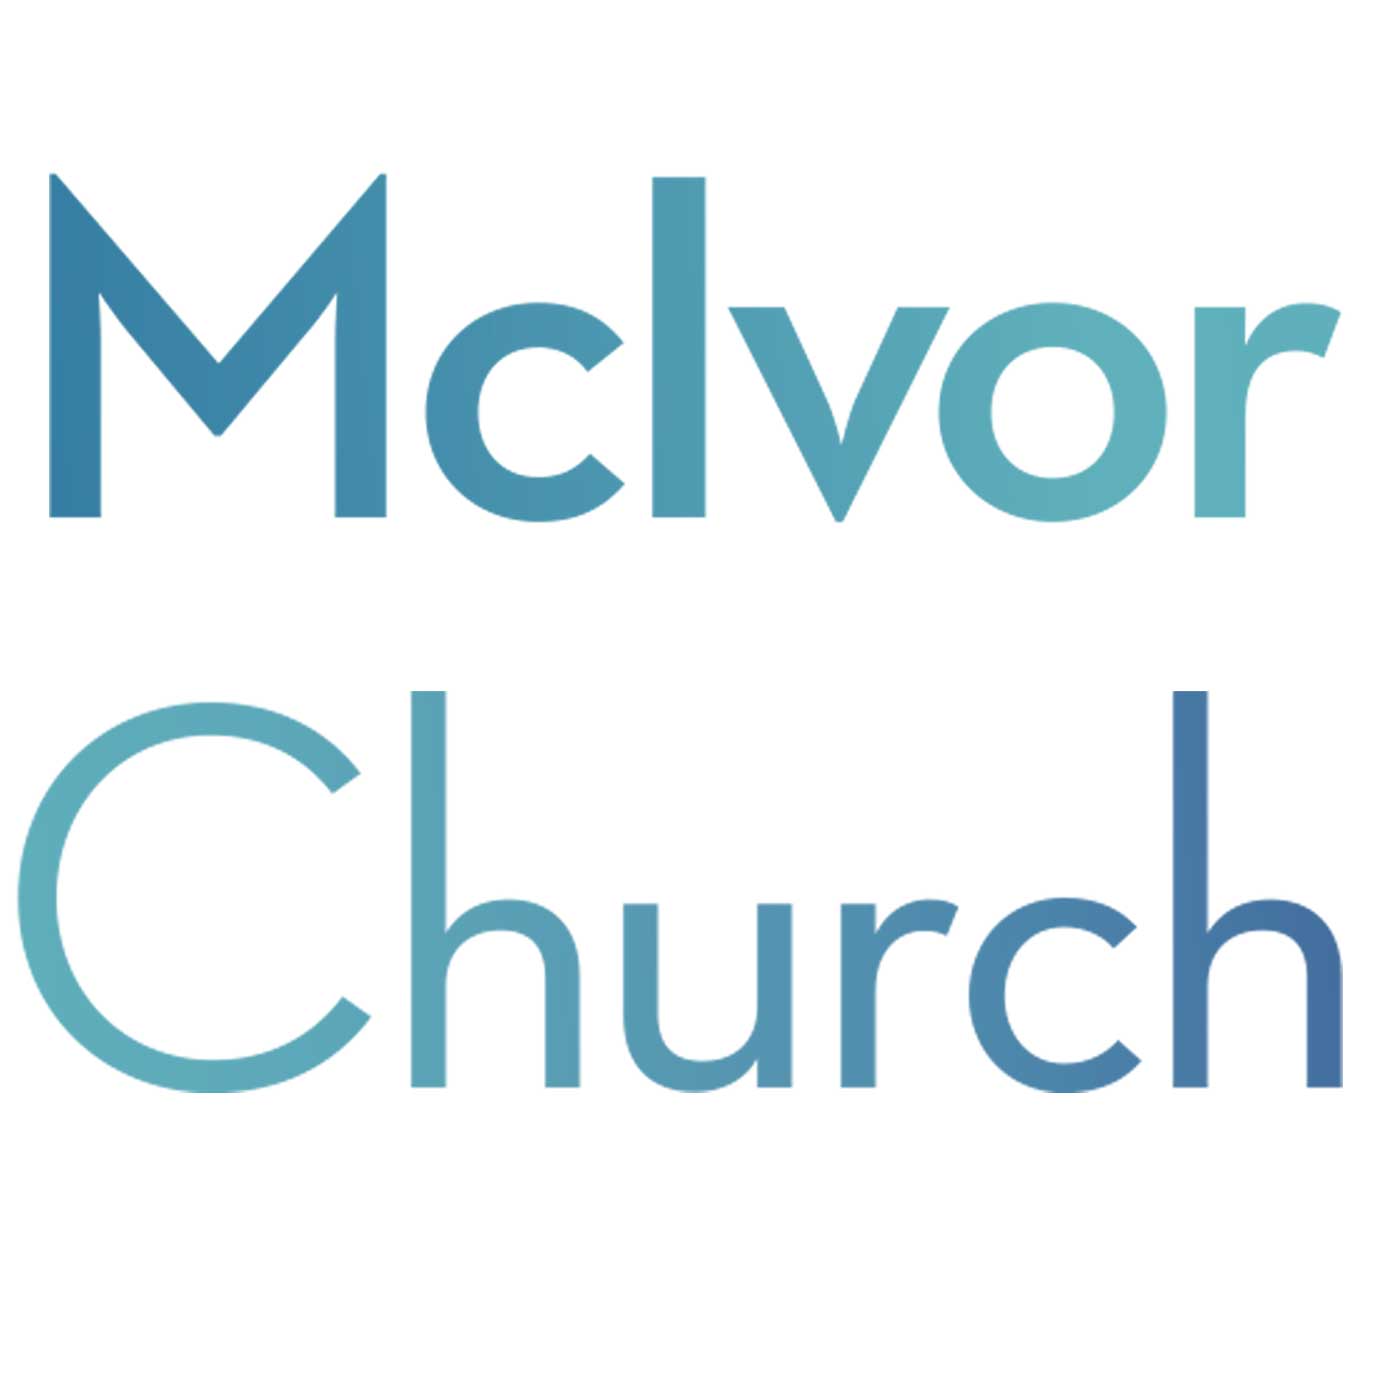 McIvor Church’s Weekly Sermons